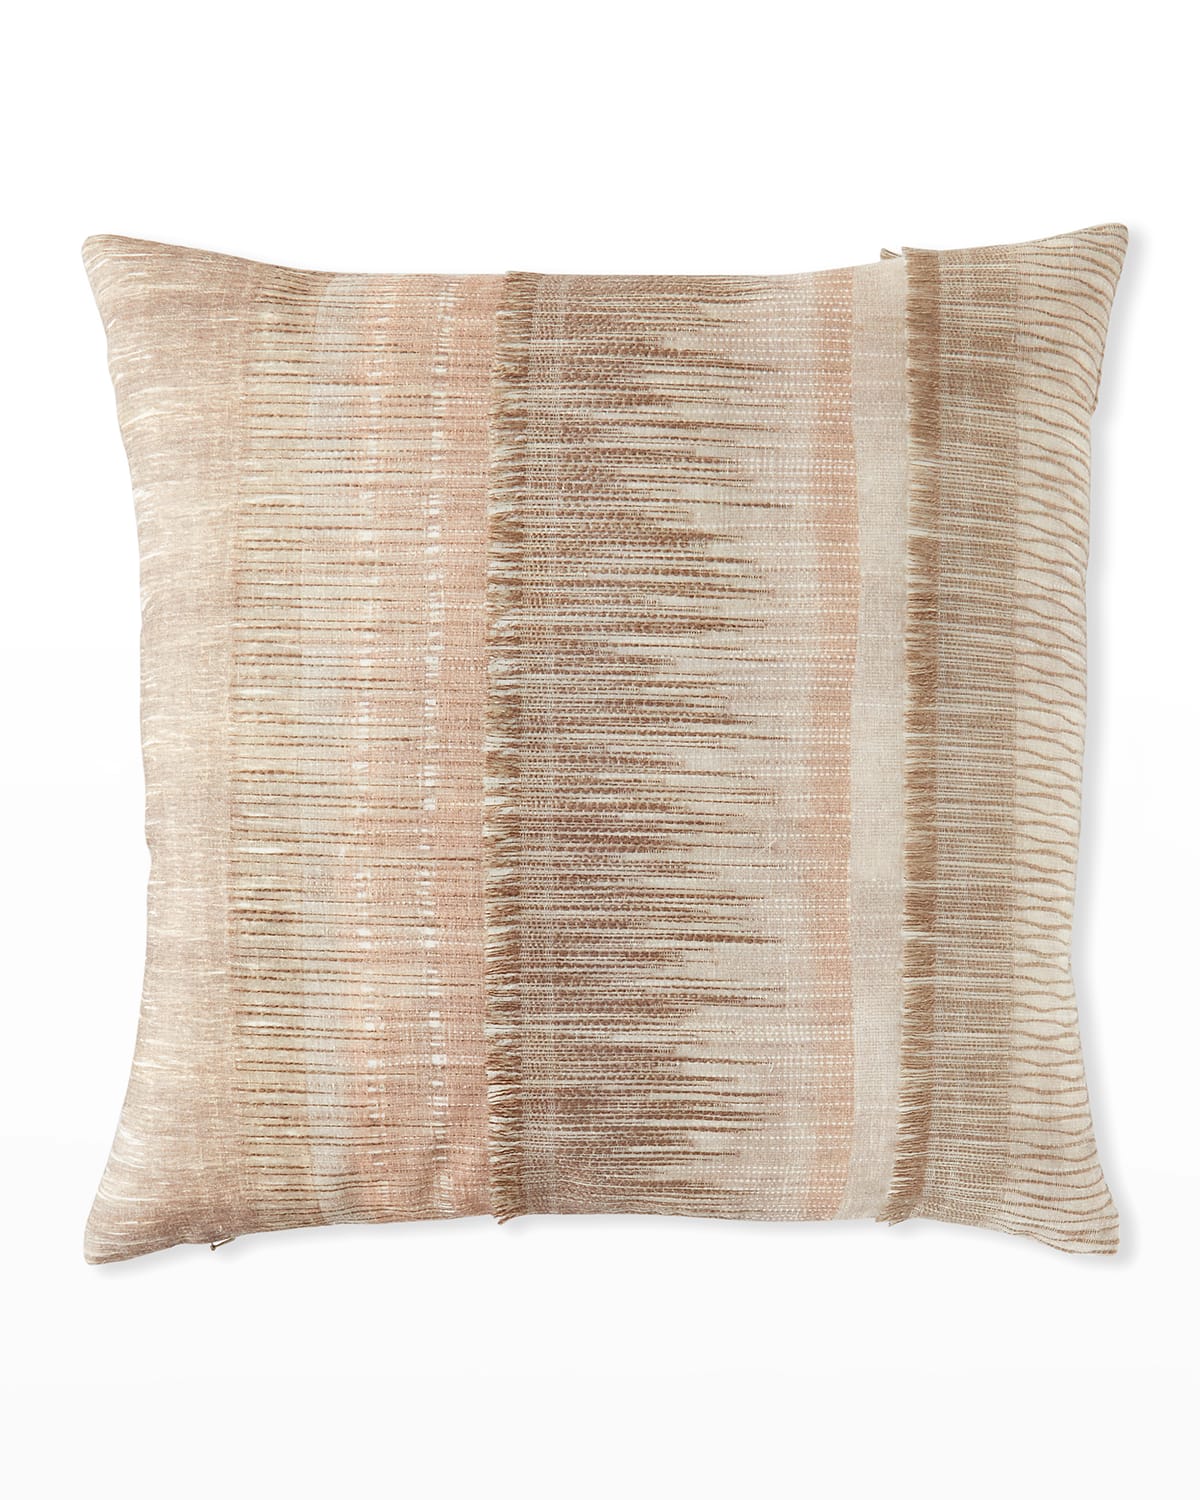 Zamira Decorative Pillow, 22" x 22"